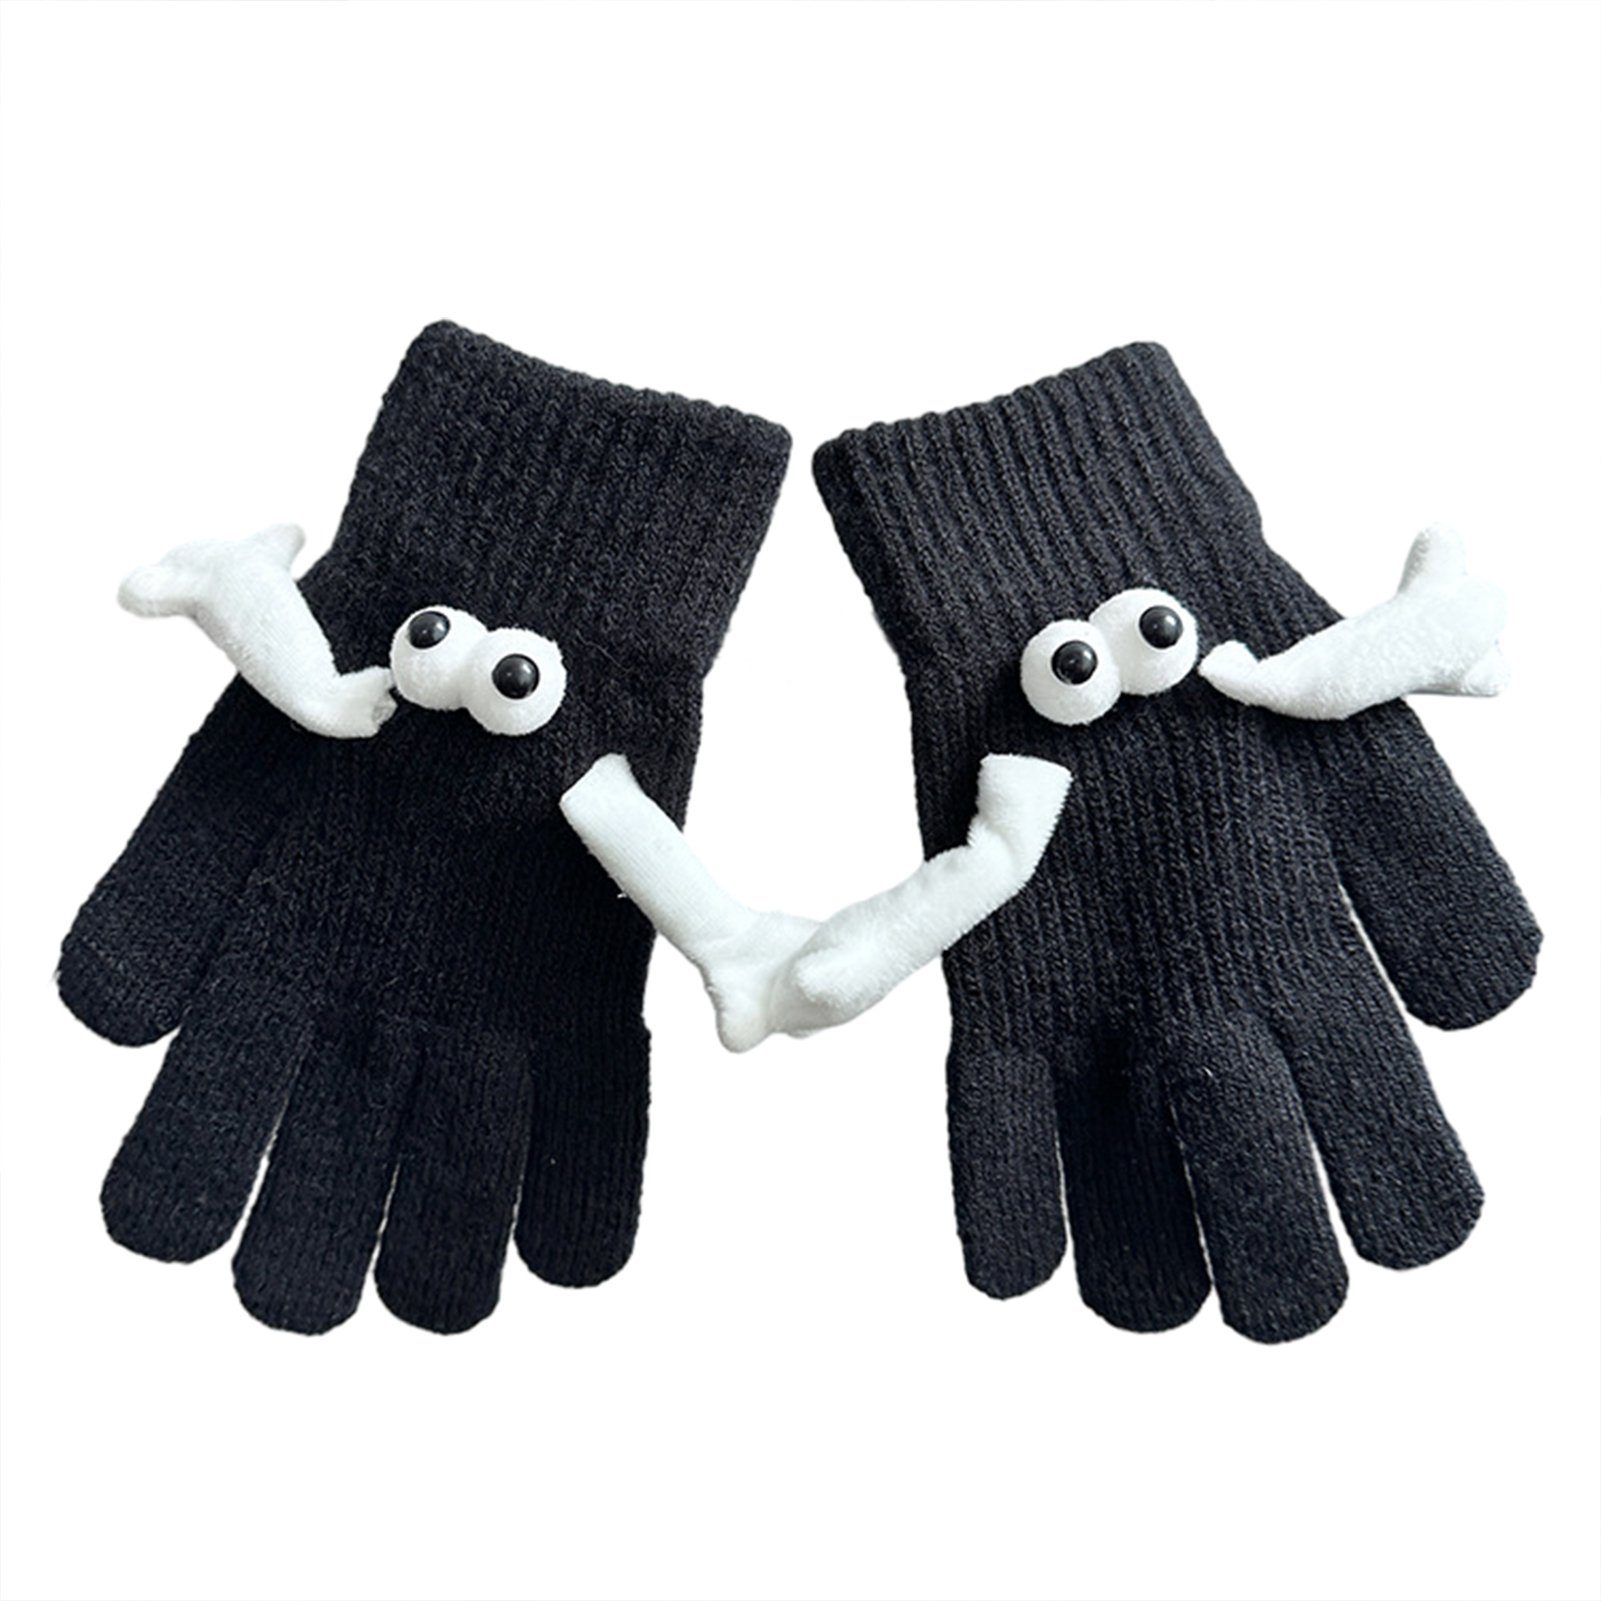 Blusmart Strickhandschuhe Warme Strickhandschuhe Mit Cartoon-Hand-in-Hand-Motiv, Bequem, Handschuhe black